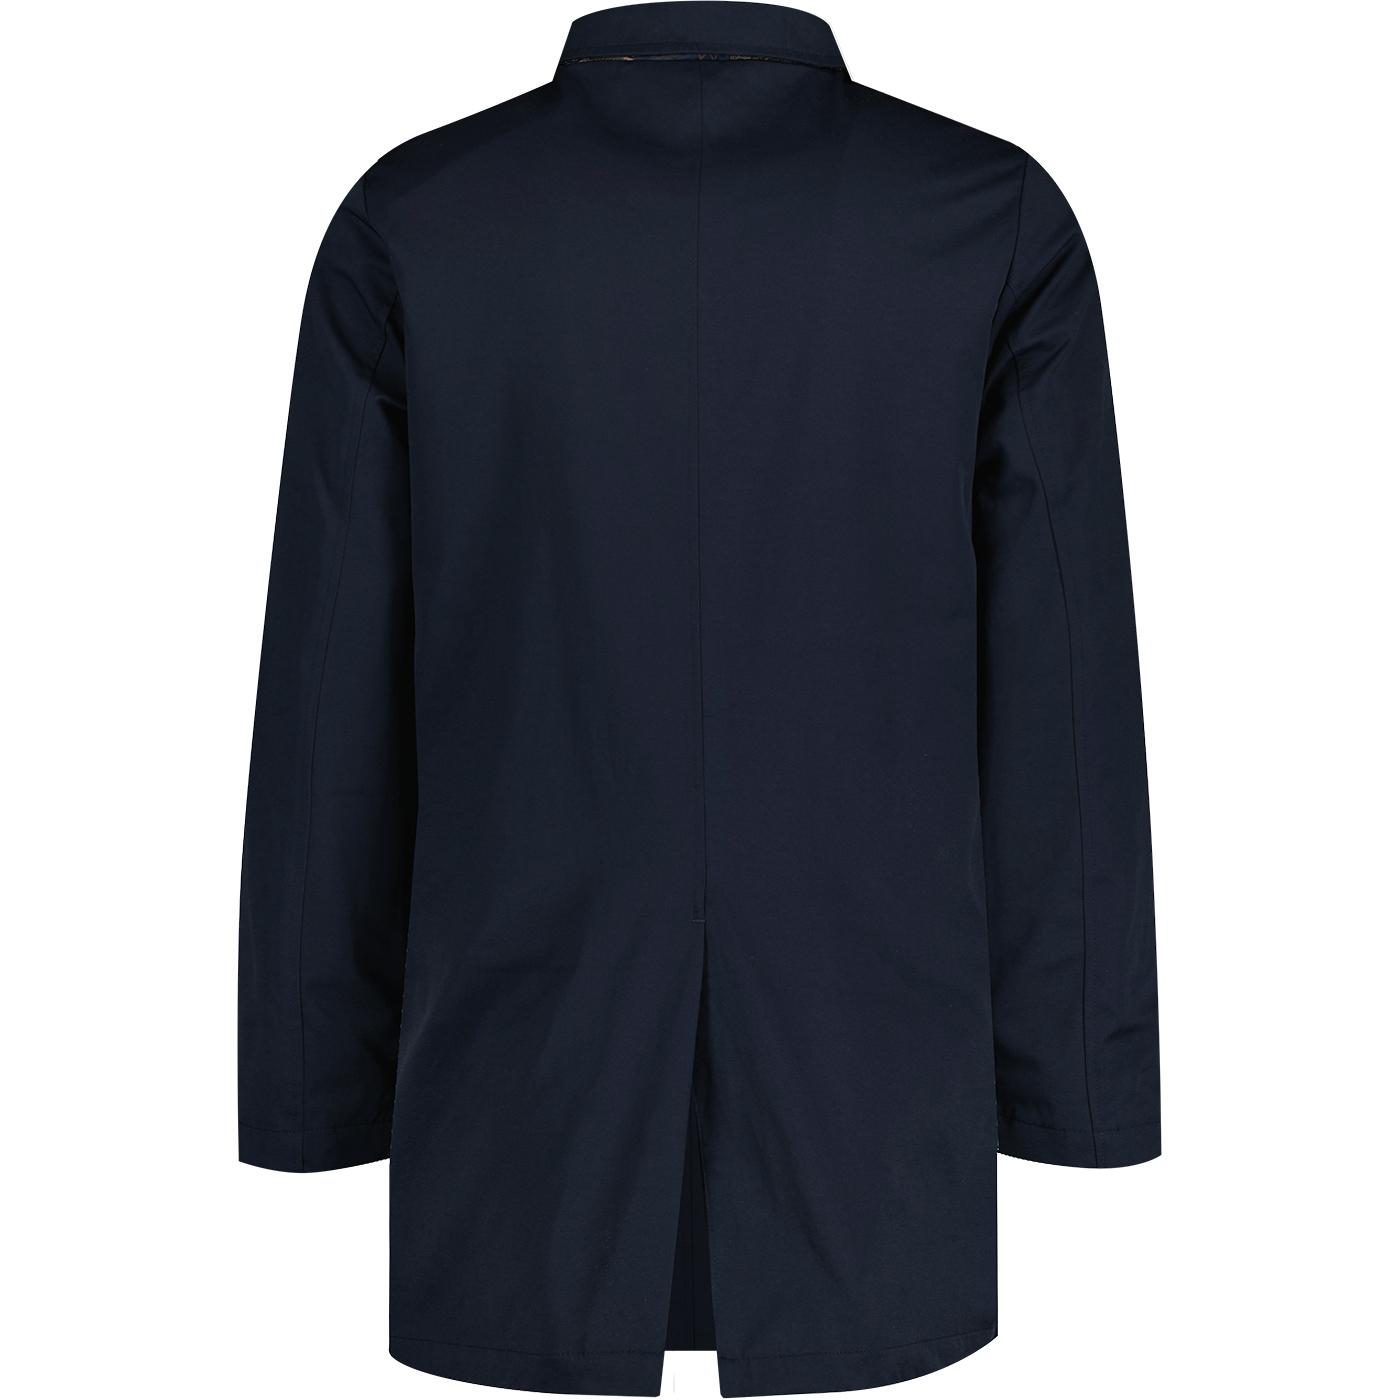 LAMBRETTA Clothing Retro Mod Coated Mac Raincoat in Navy